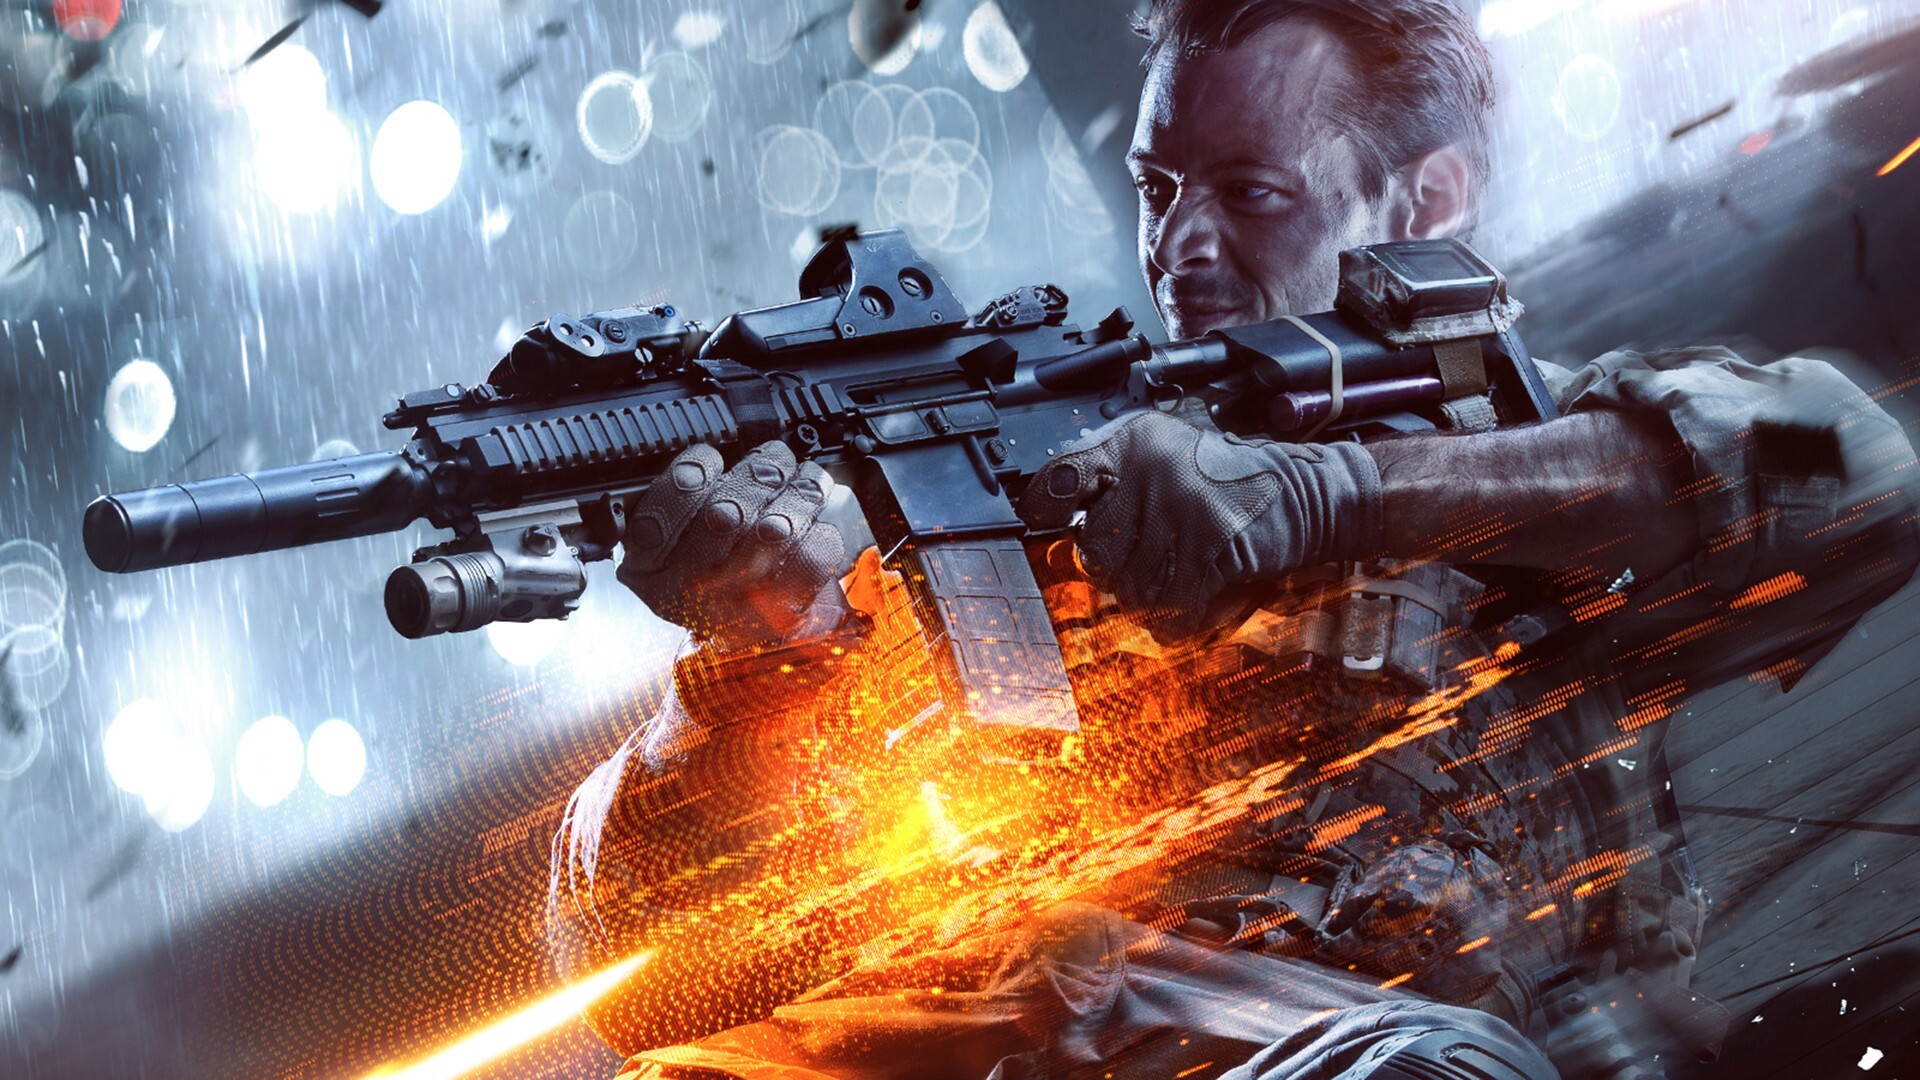 games hd wallpaper download,gun,action adventure game,shooter game,rifle,firearm